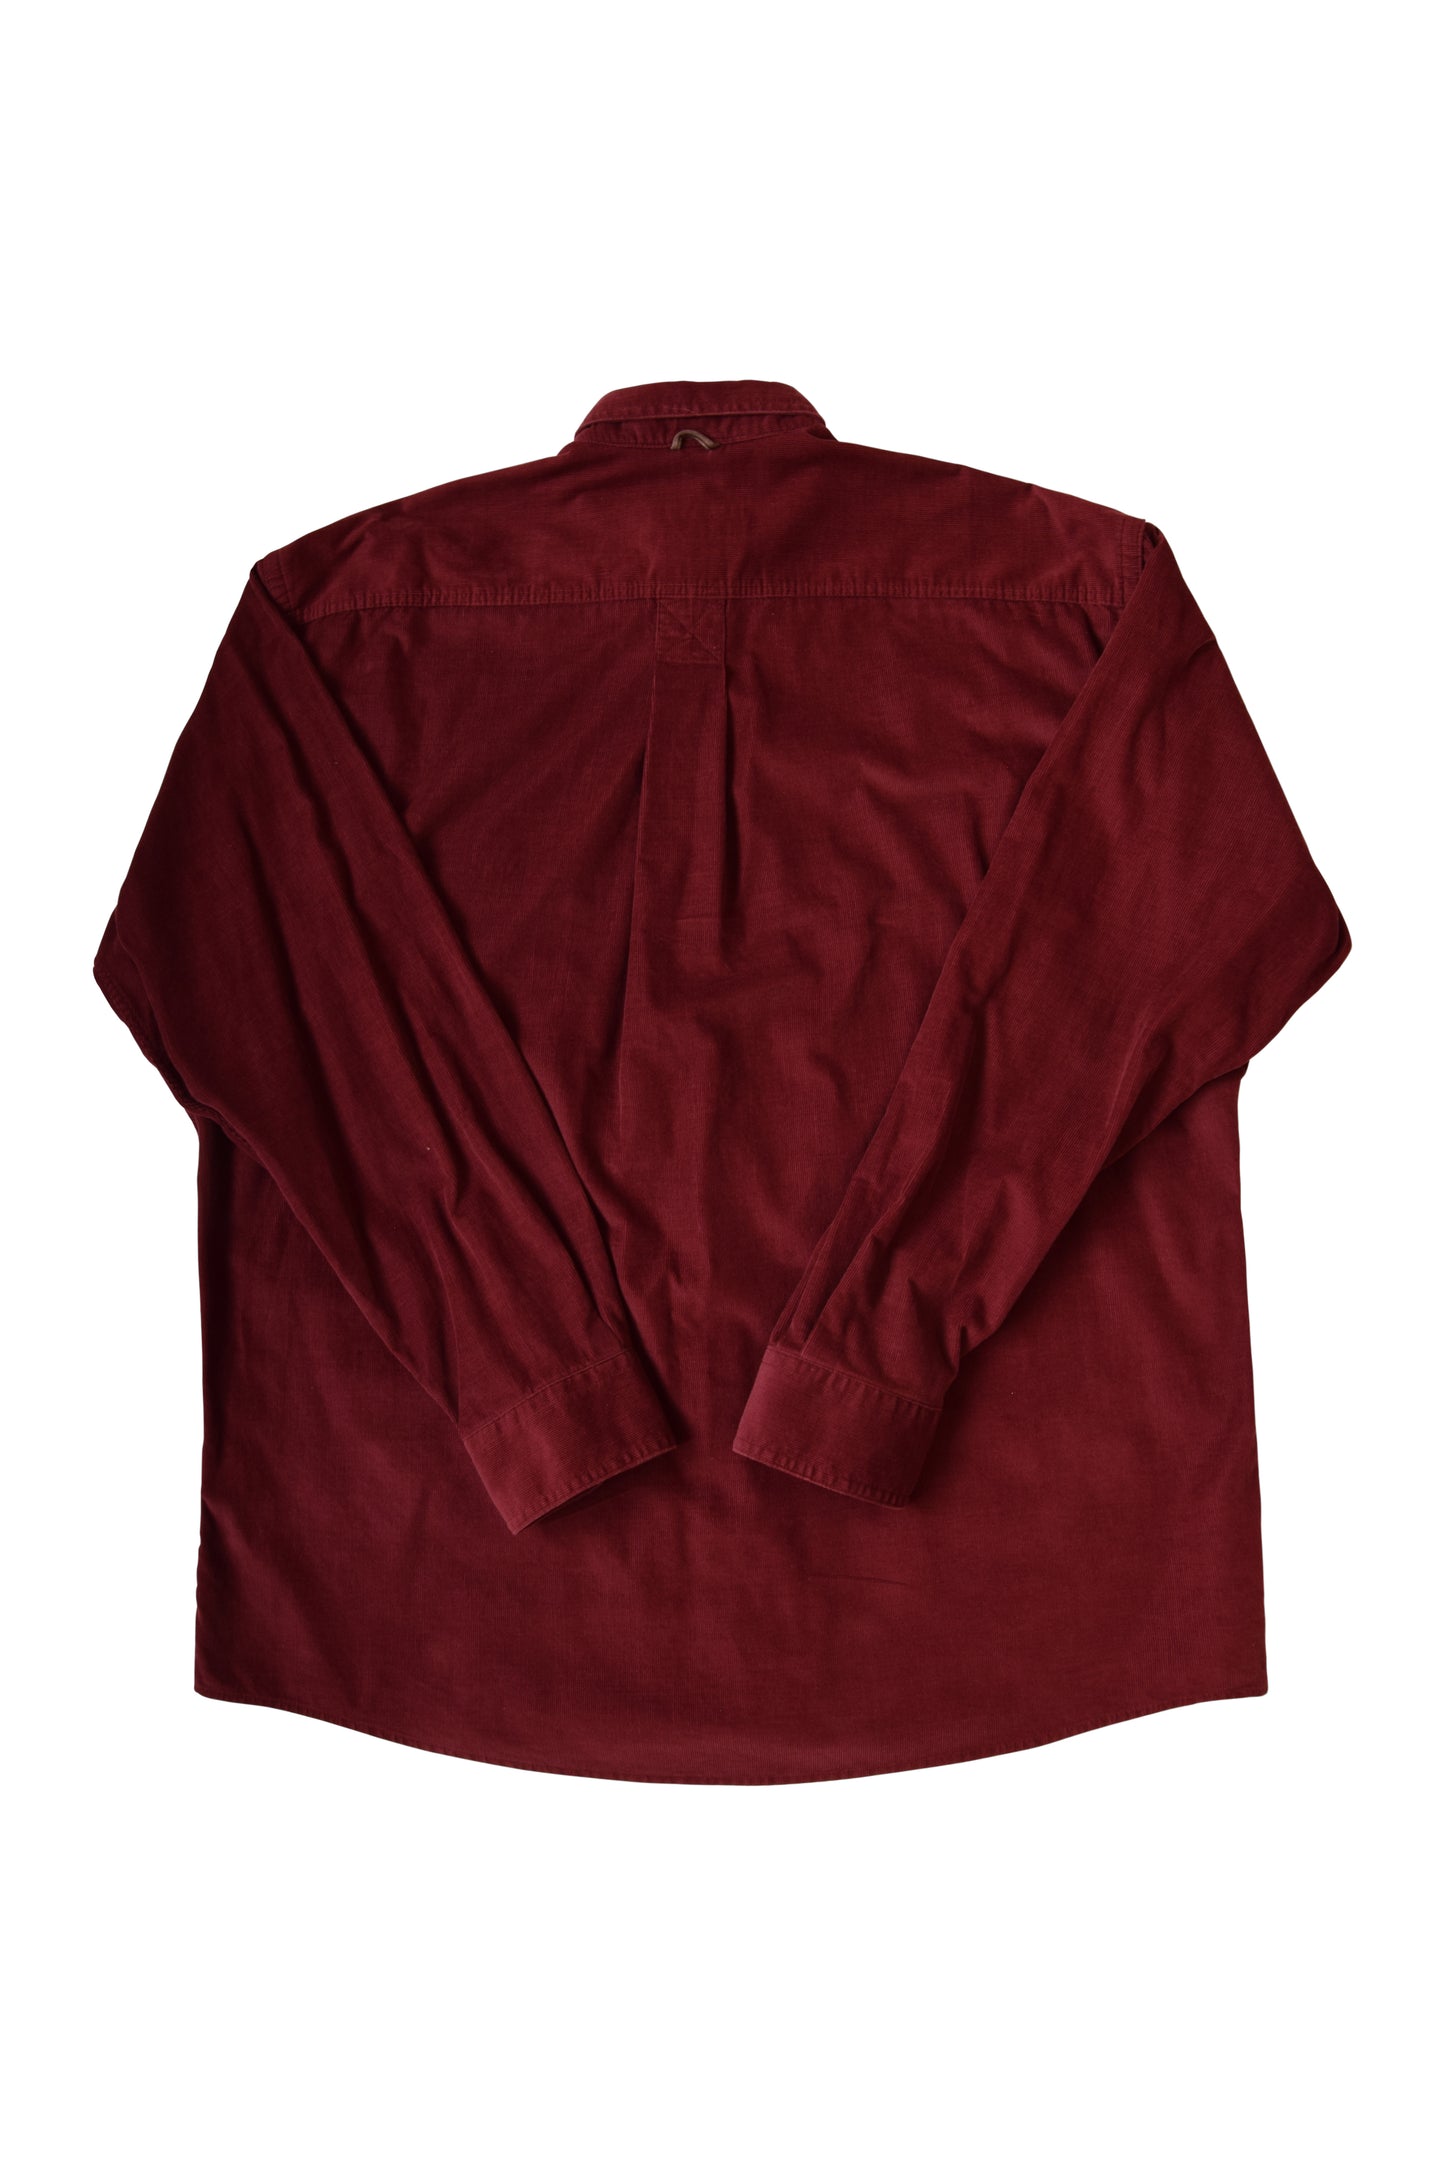 Vintage Timberland Corduroy Weathergear Burgundy Shirt 